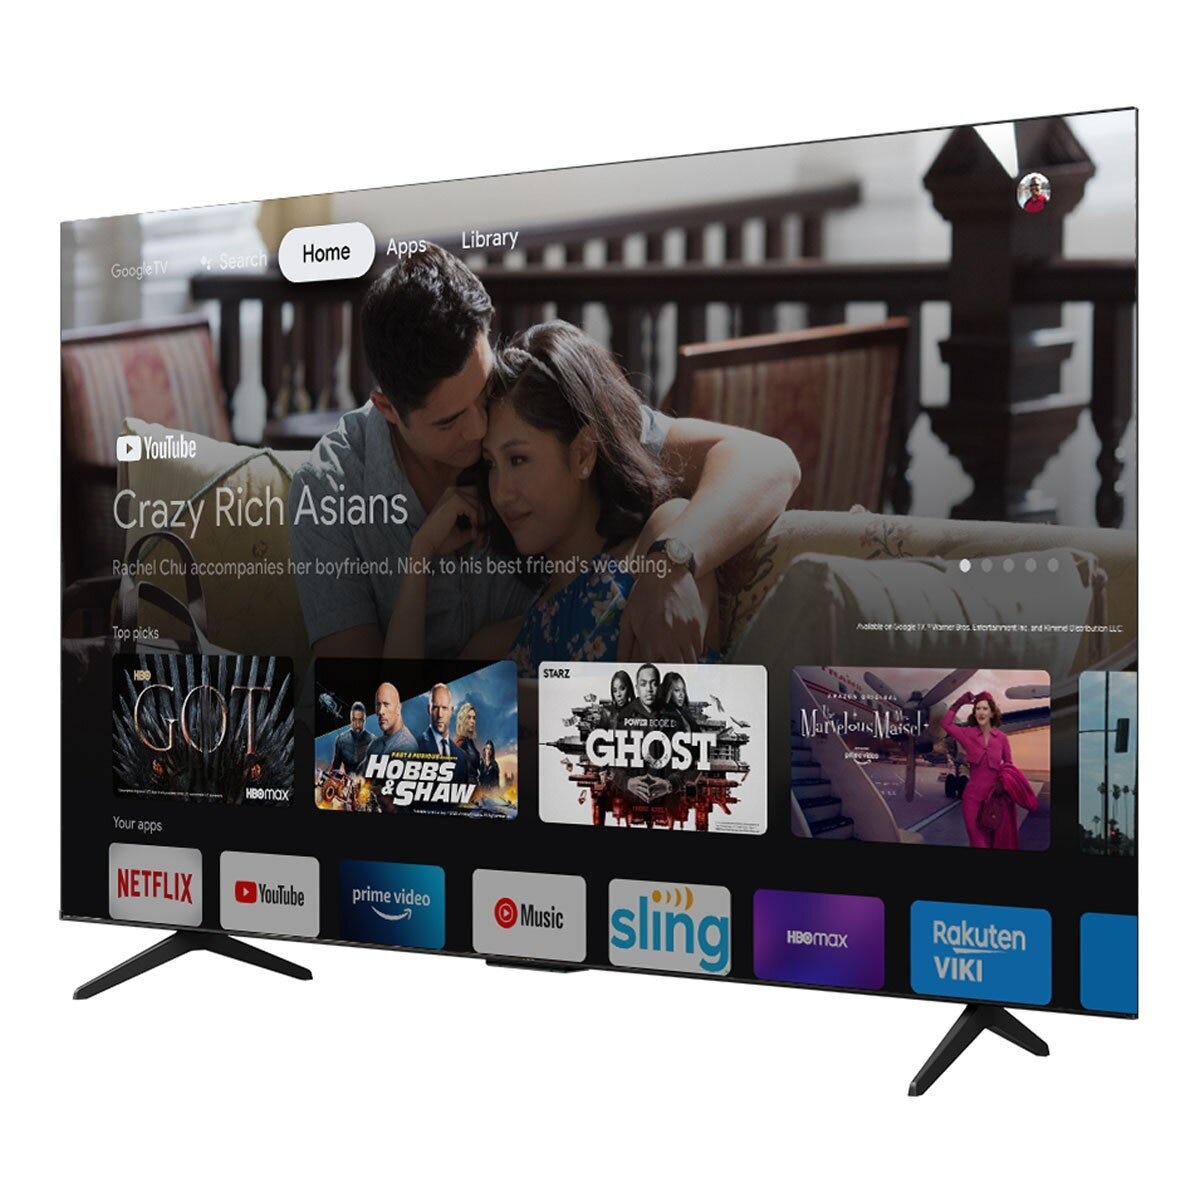 TCL 43吋 4K UHD Google TV 液晶顯示器 43P755